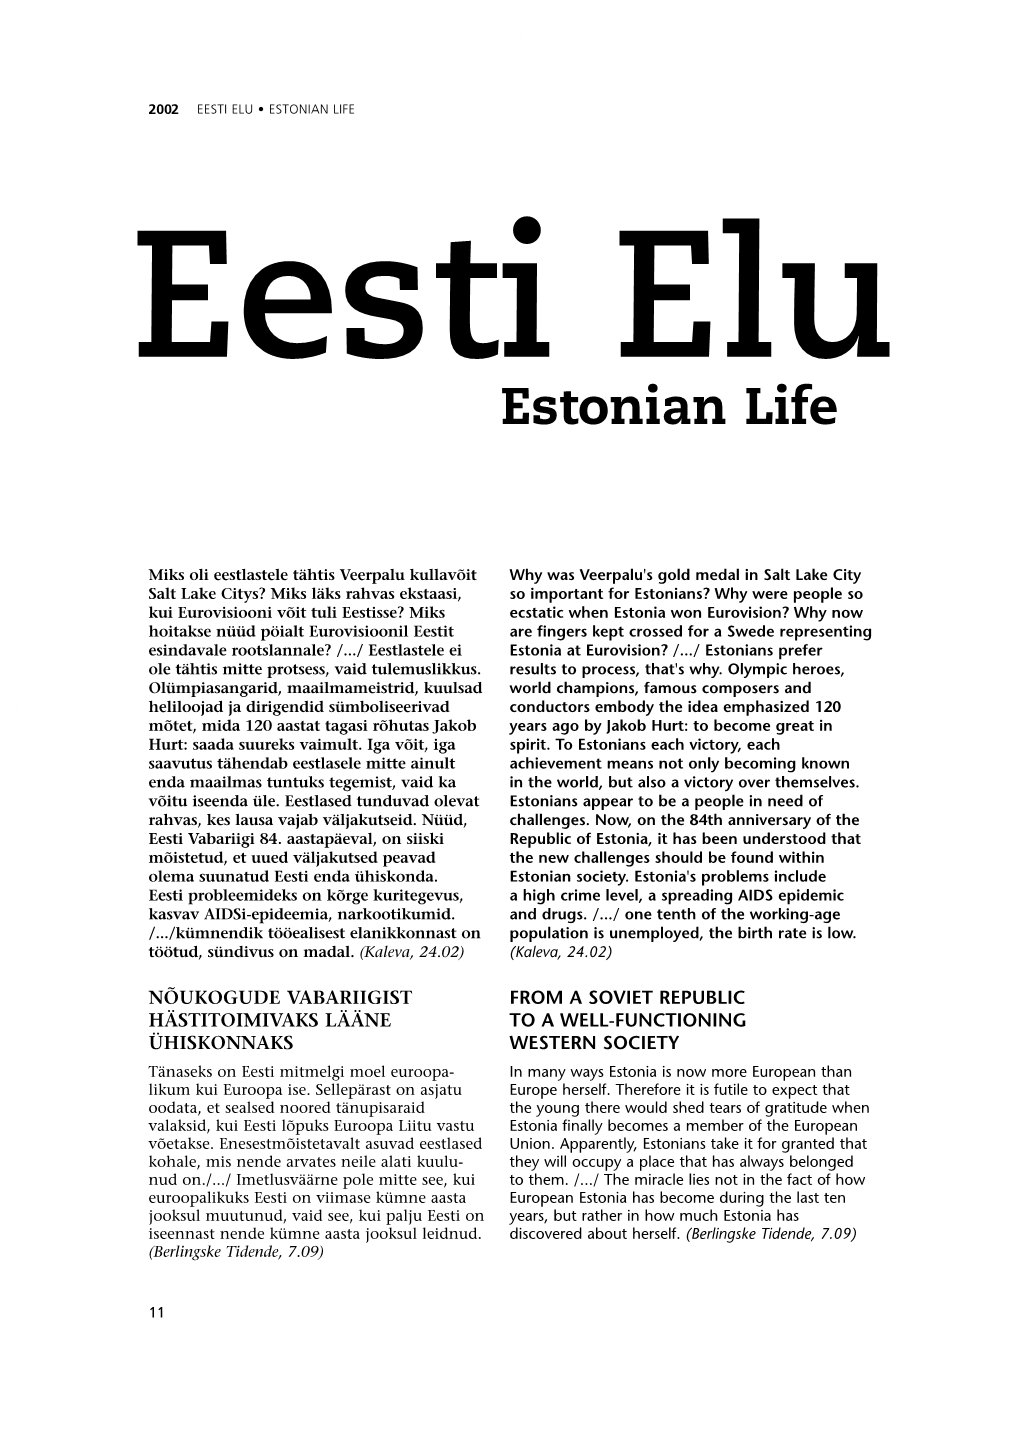 ESTONIAN LIFE Eesti Elu Estonian Life